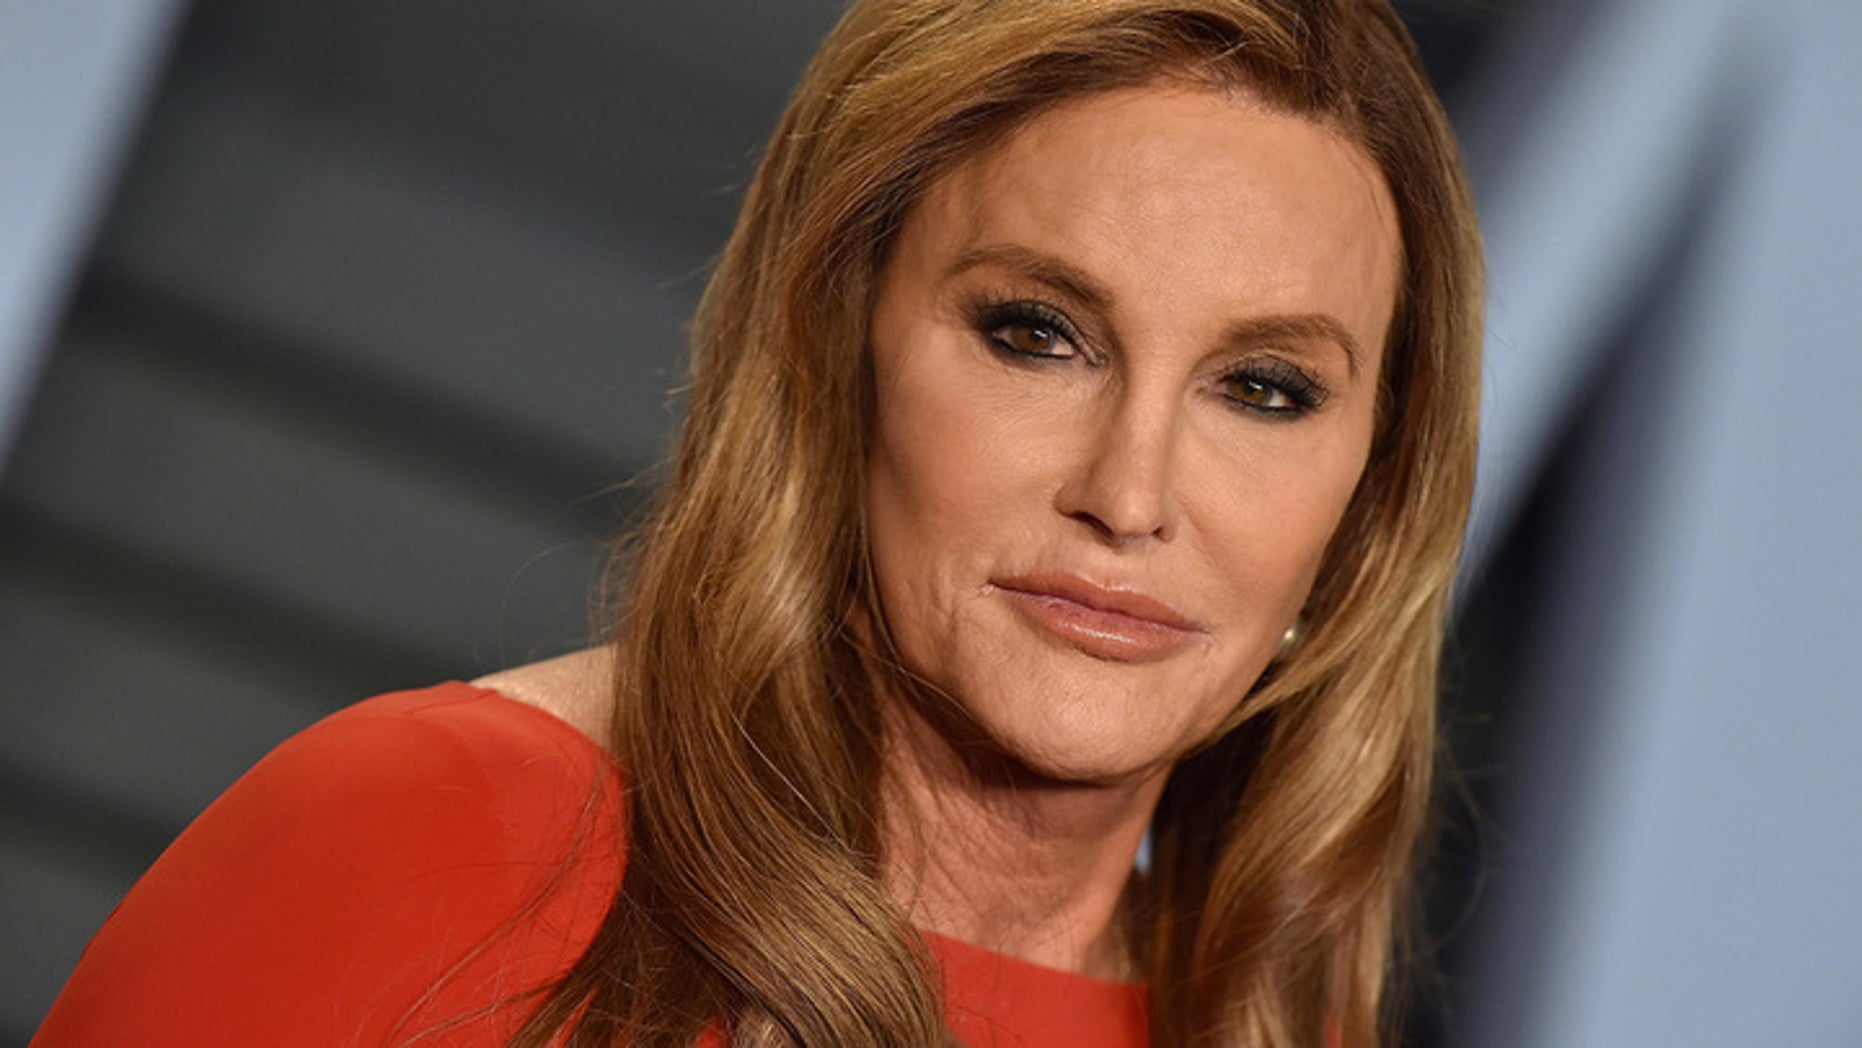 California church draws backlash for sign: 'Bruce Jenner is still a man' | Fox News